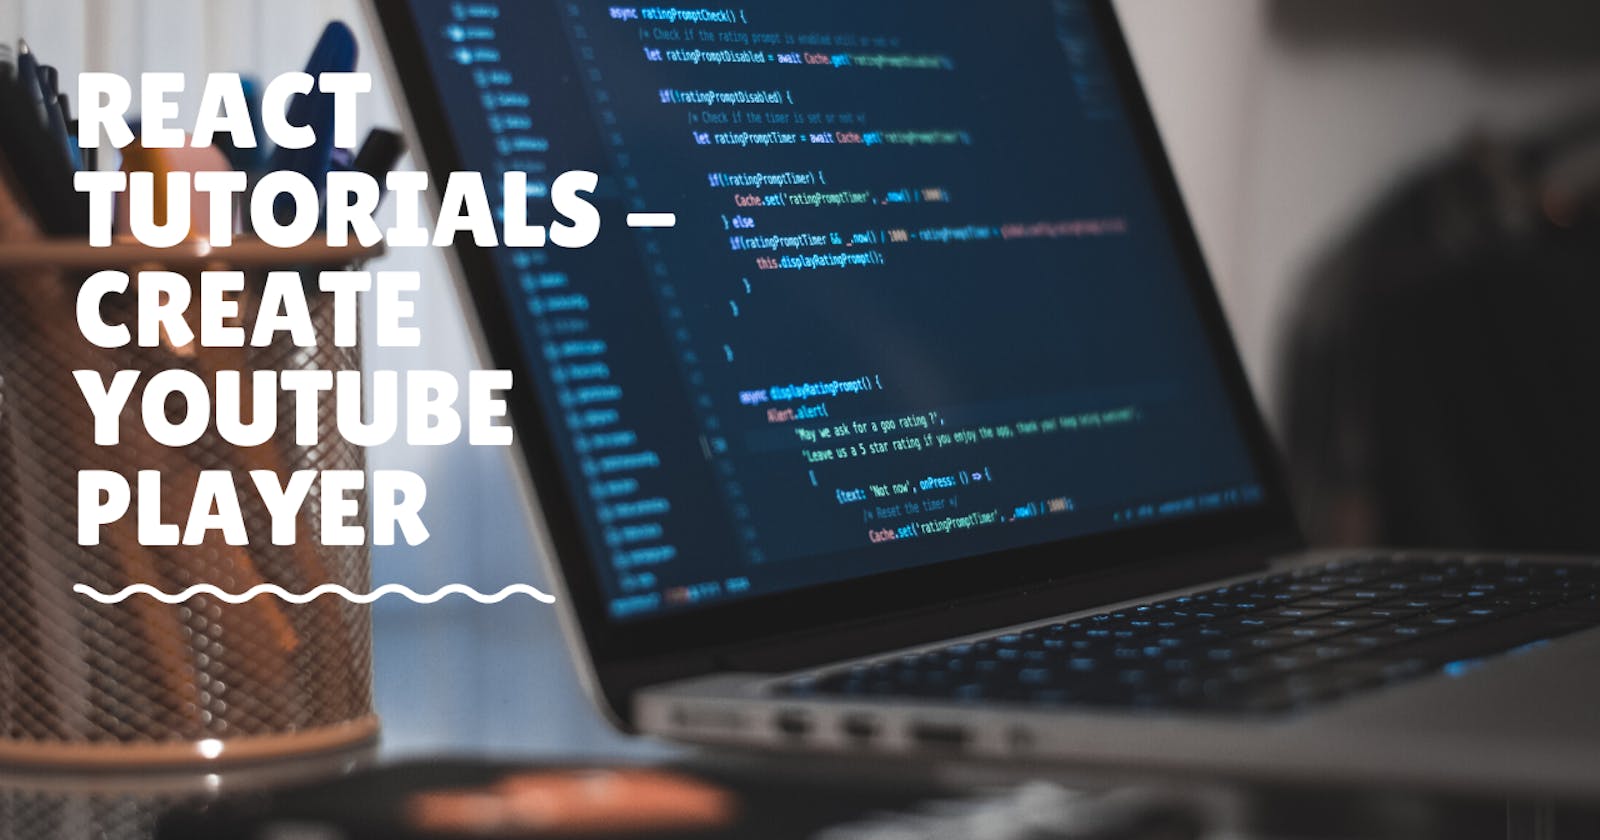 React Tutorials - Create Youtube Player - 3